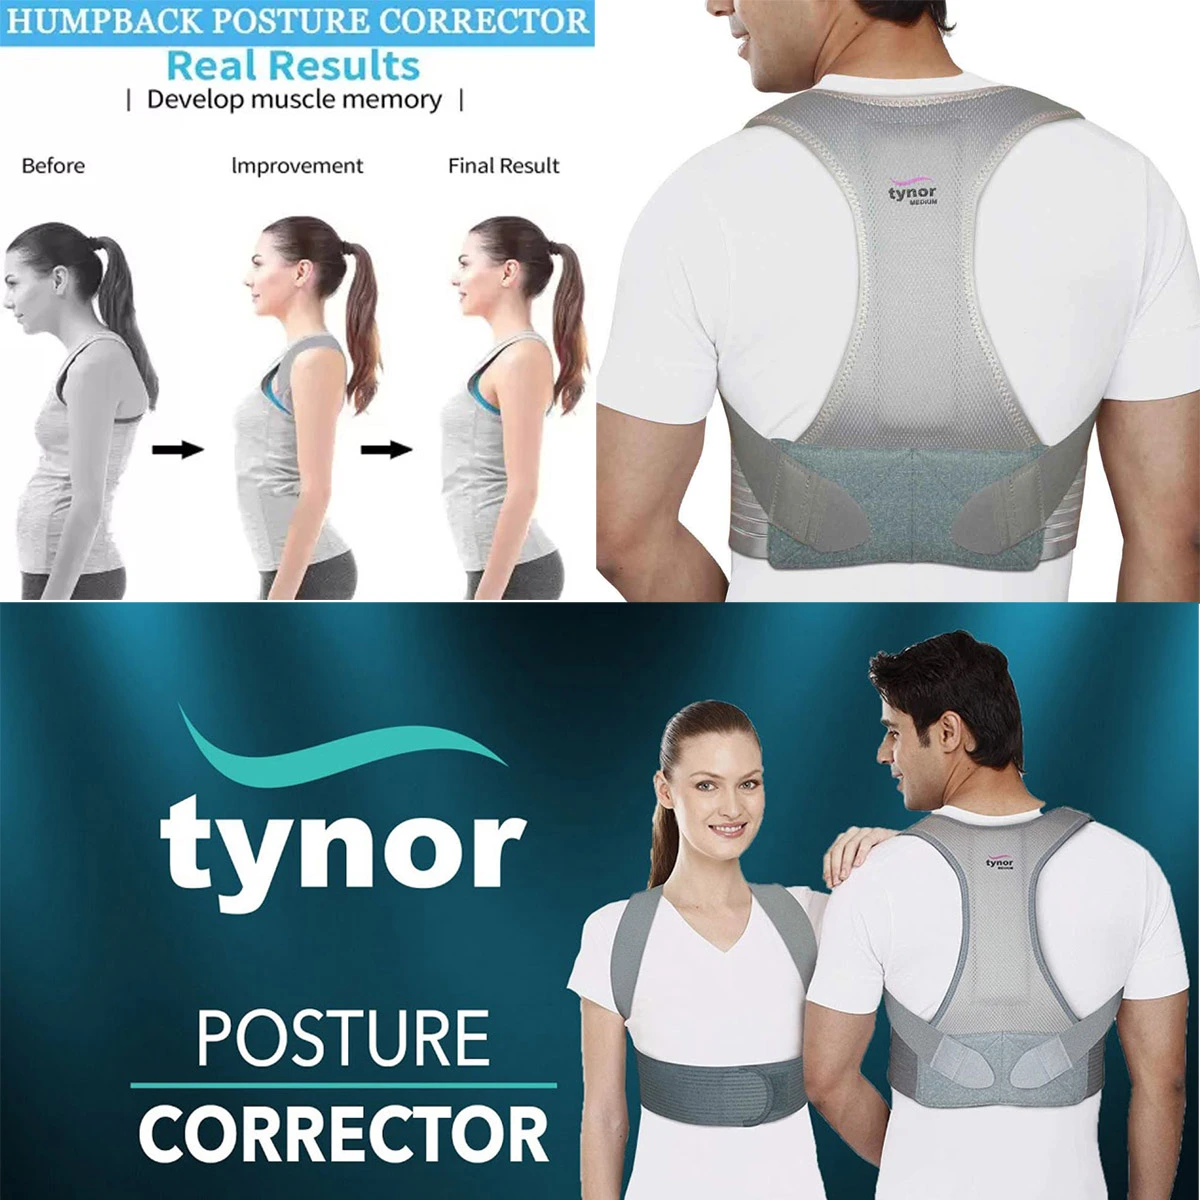 Tynor Posture Corrector Price in Bangladesh